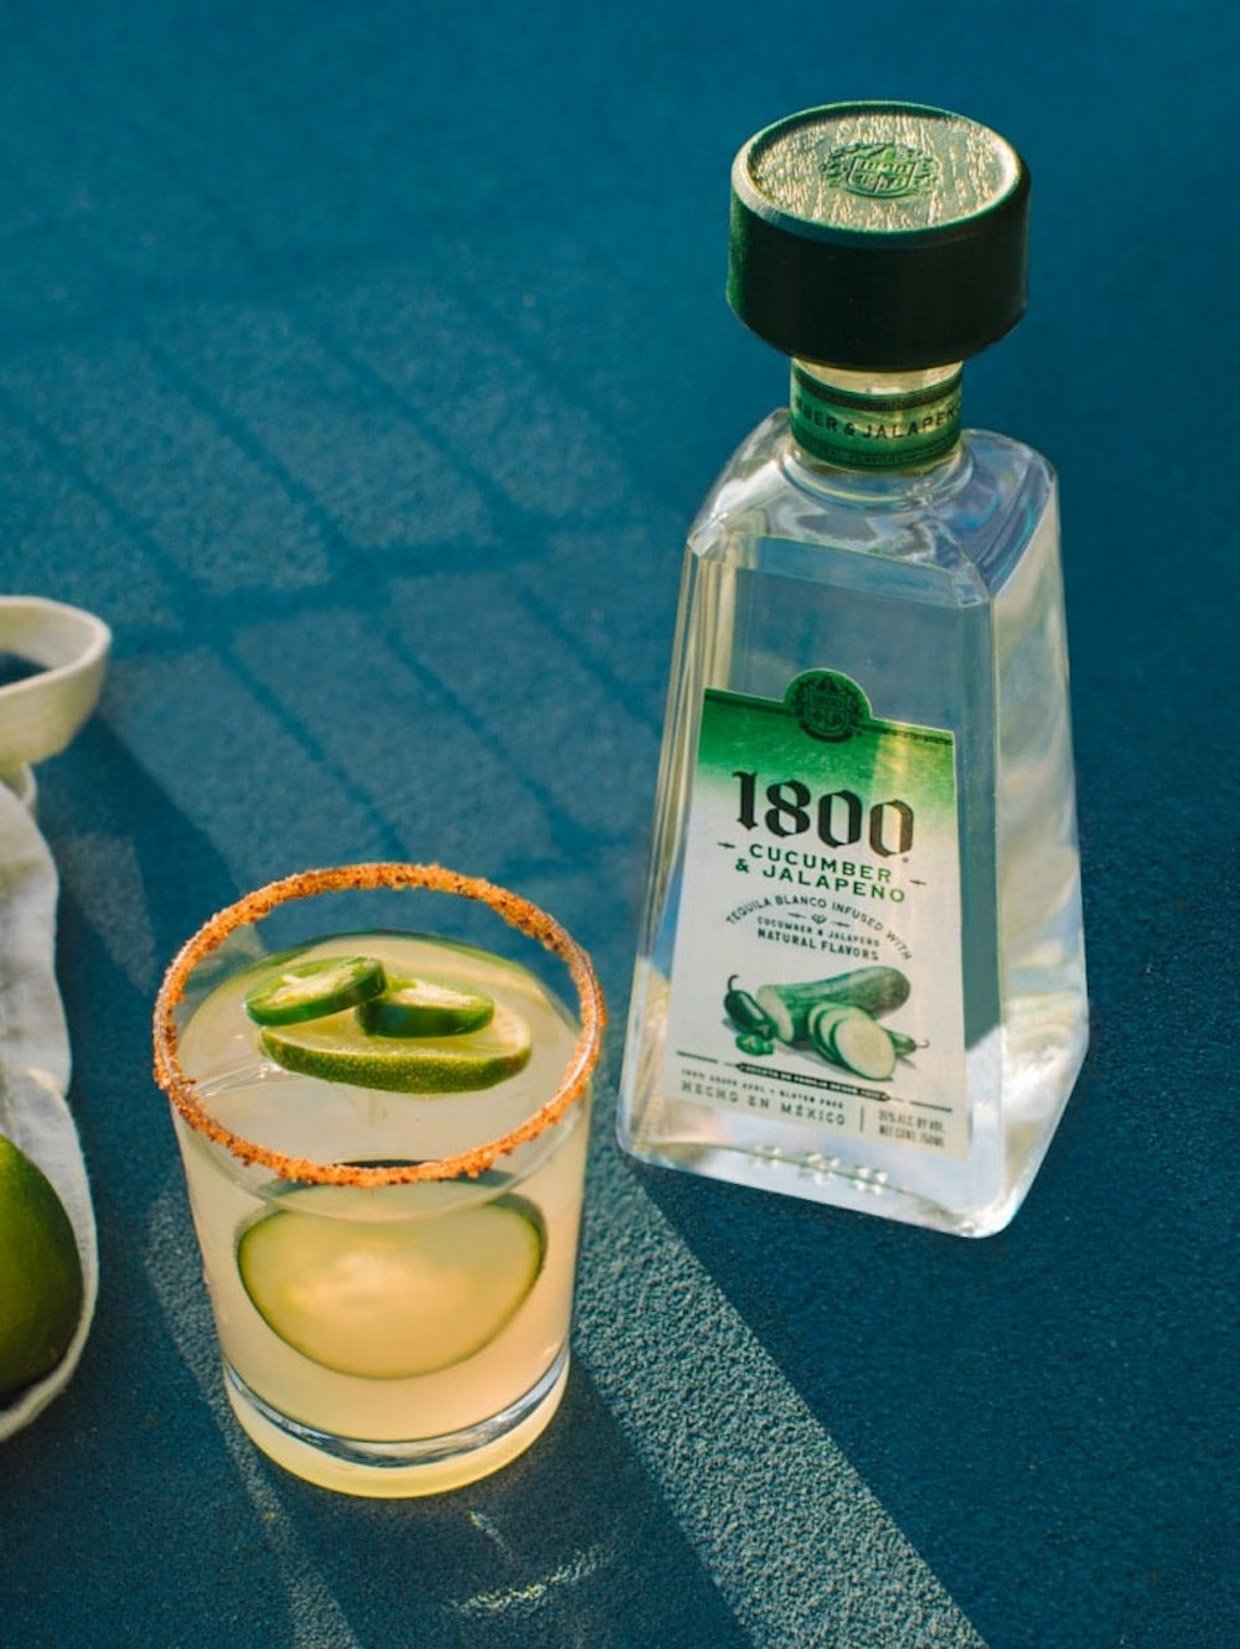 1800 Cucumber & Jalapeño Tequila